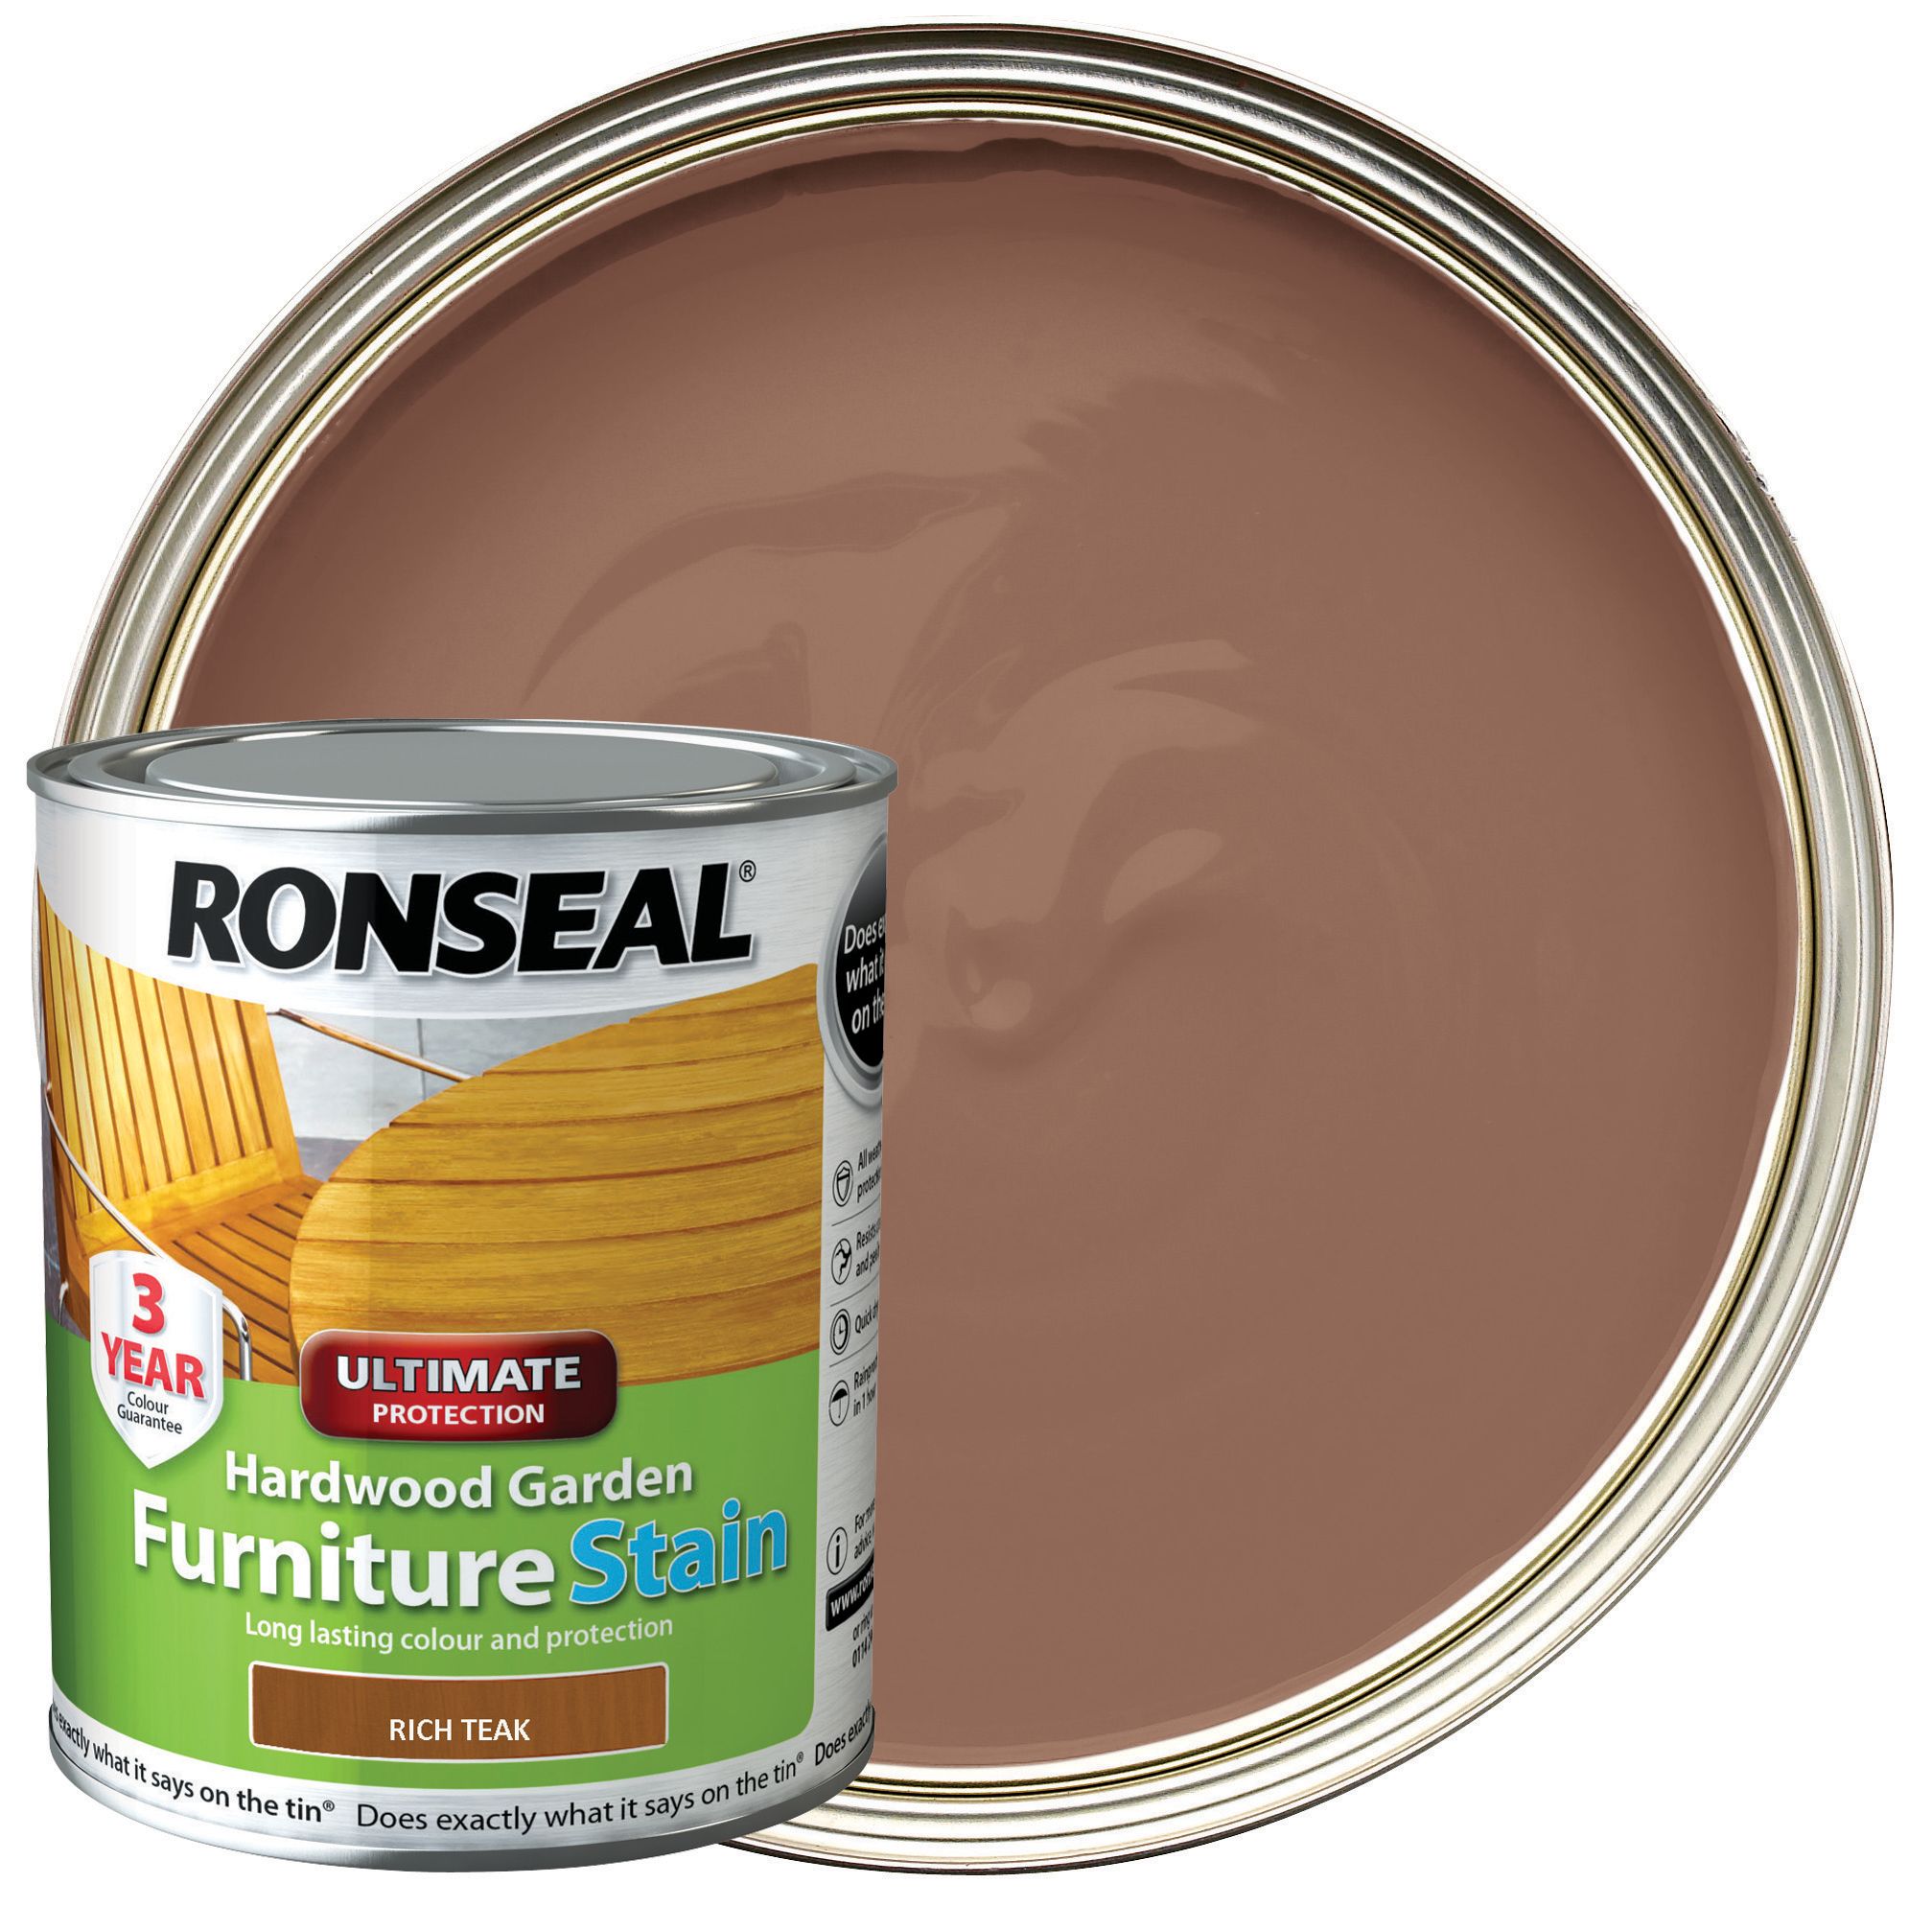 Image of Ronseal Ultimate Protection Hardwood Garden Furniture Stain - Rich Teak 750ml